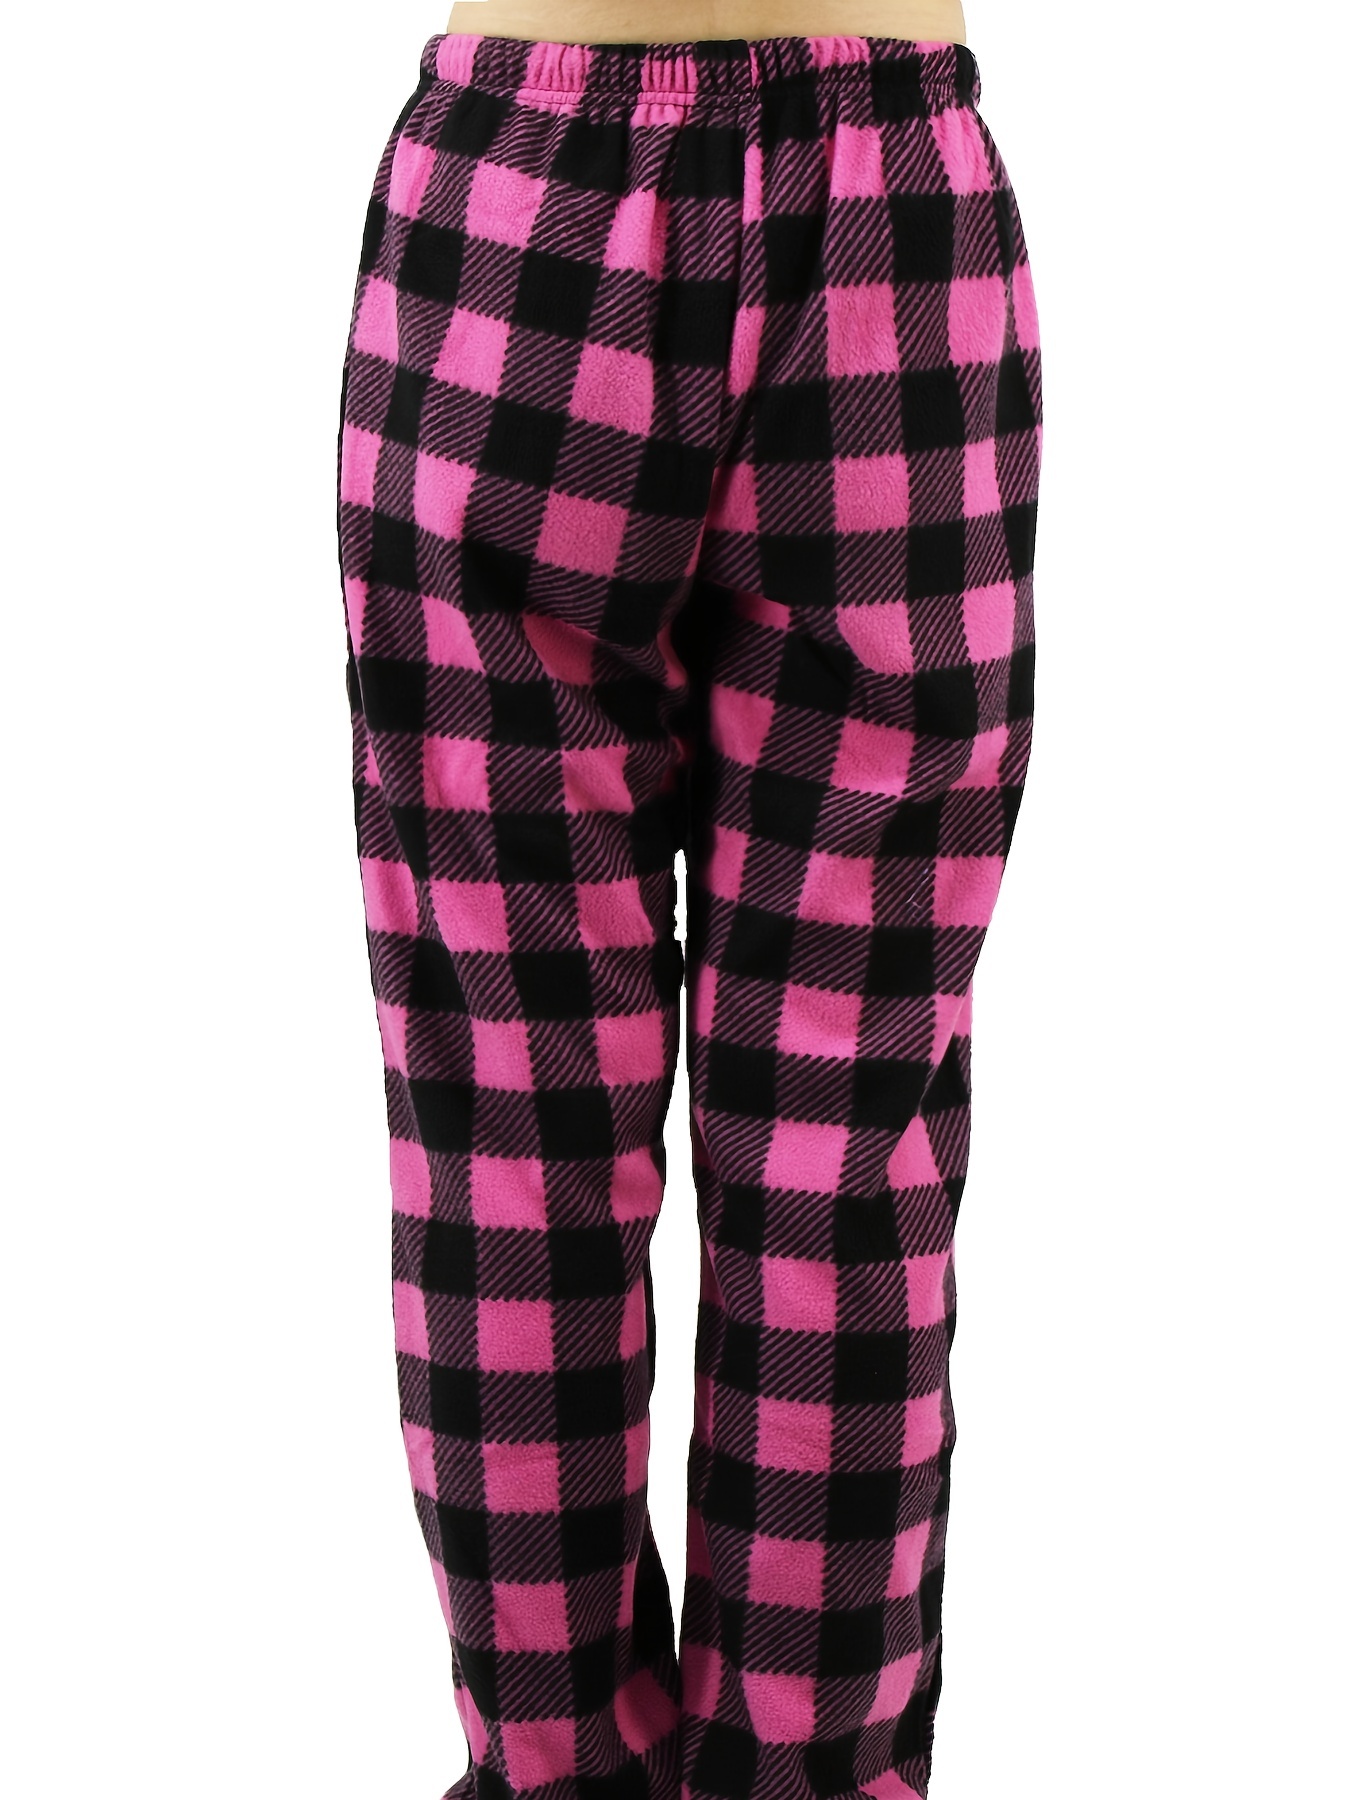 Women's 2-pack Lounge Pants Comfortable Pajama Pants Plaid Pajama